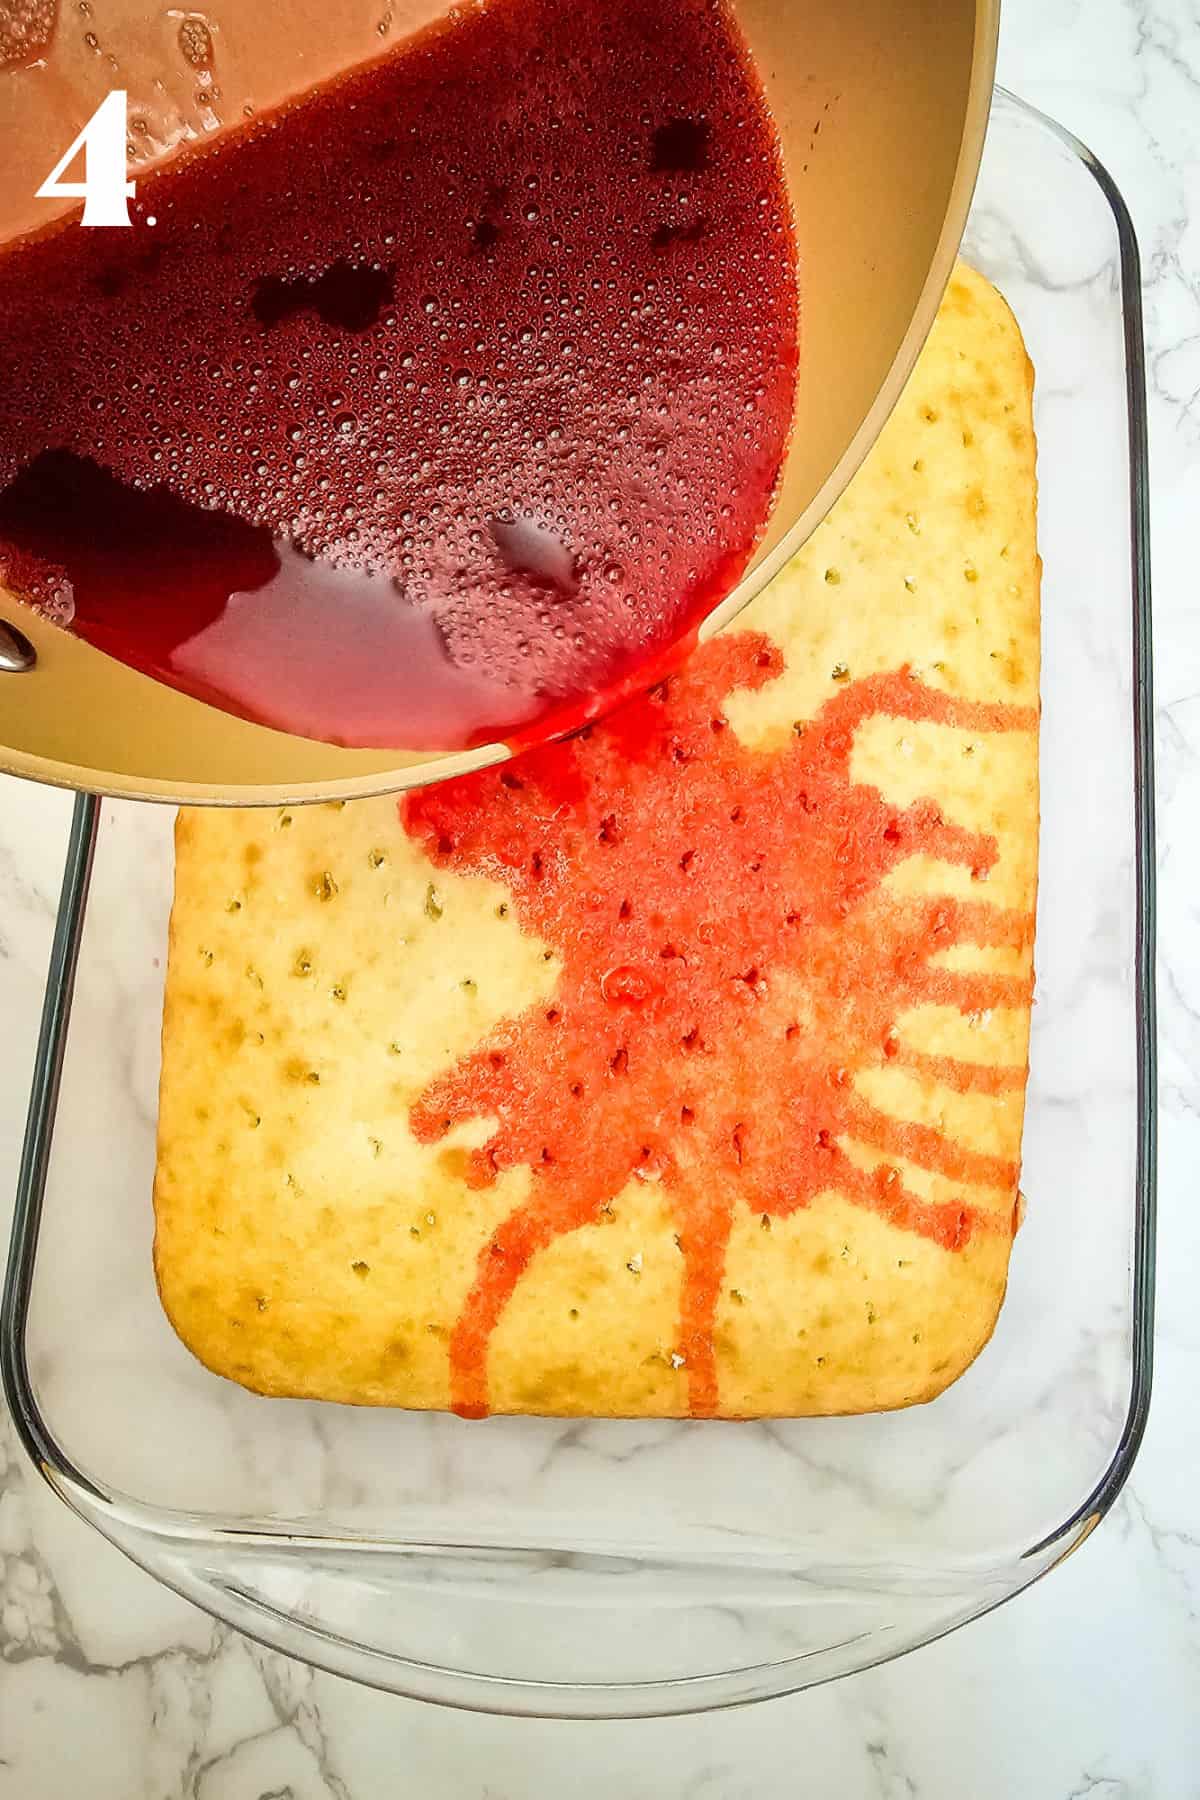 How to Make Cherry Poke Cake - Step 4 - pouring jello over cake.